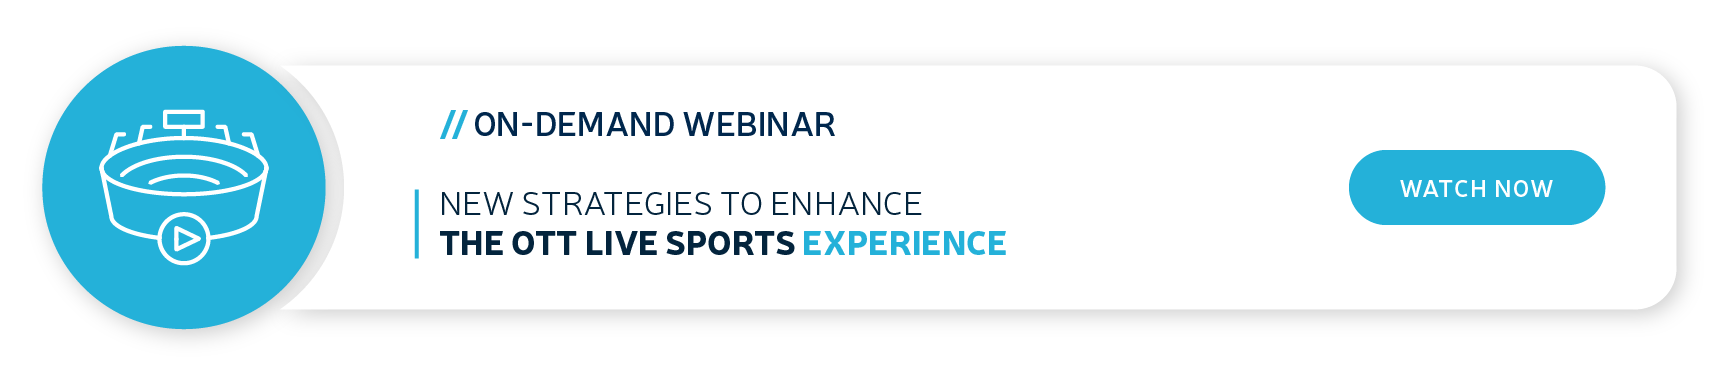 enhance-ott-live-sports-experience-webinar